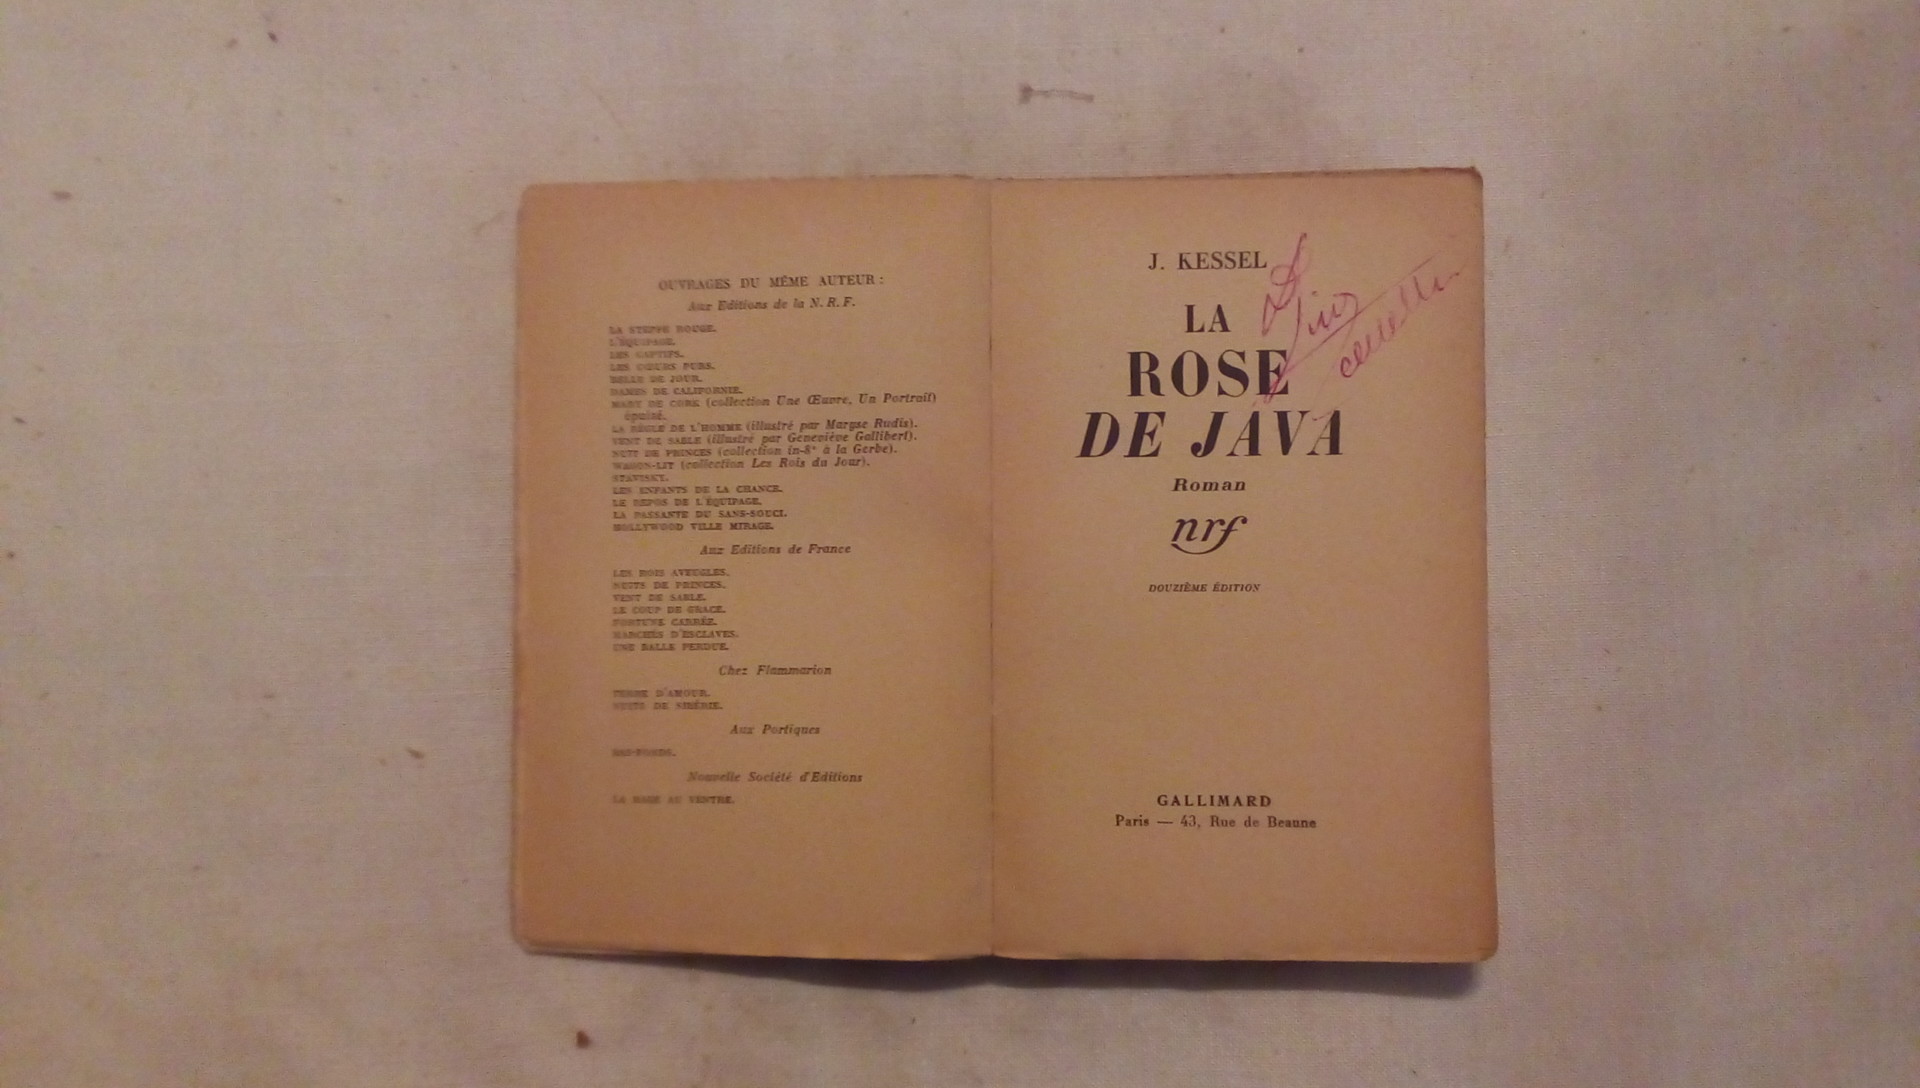 La rose de java - J. Kessel Gallimard 